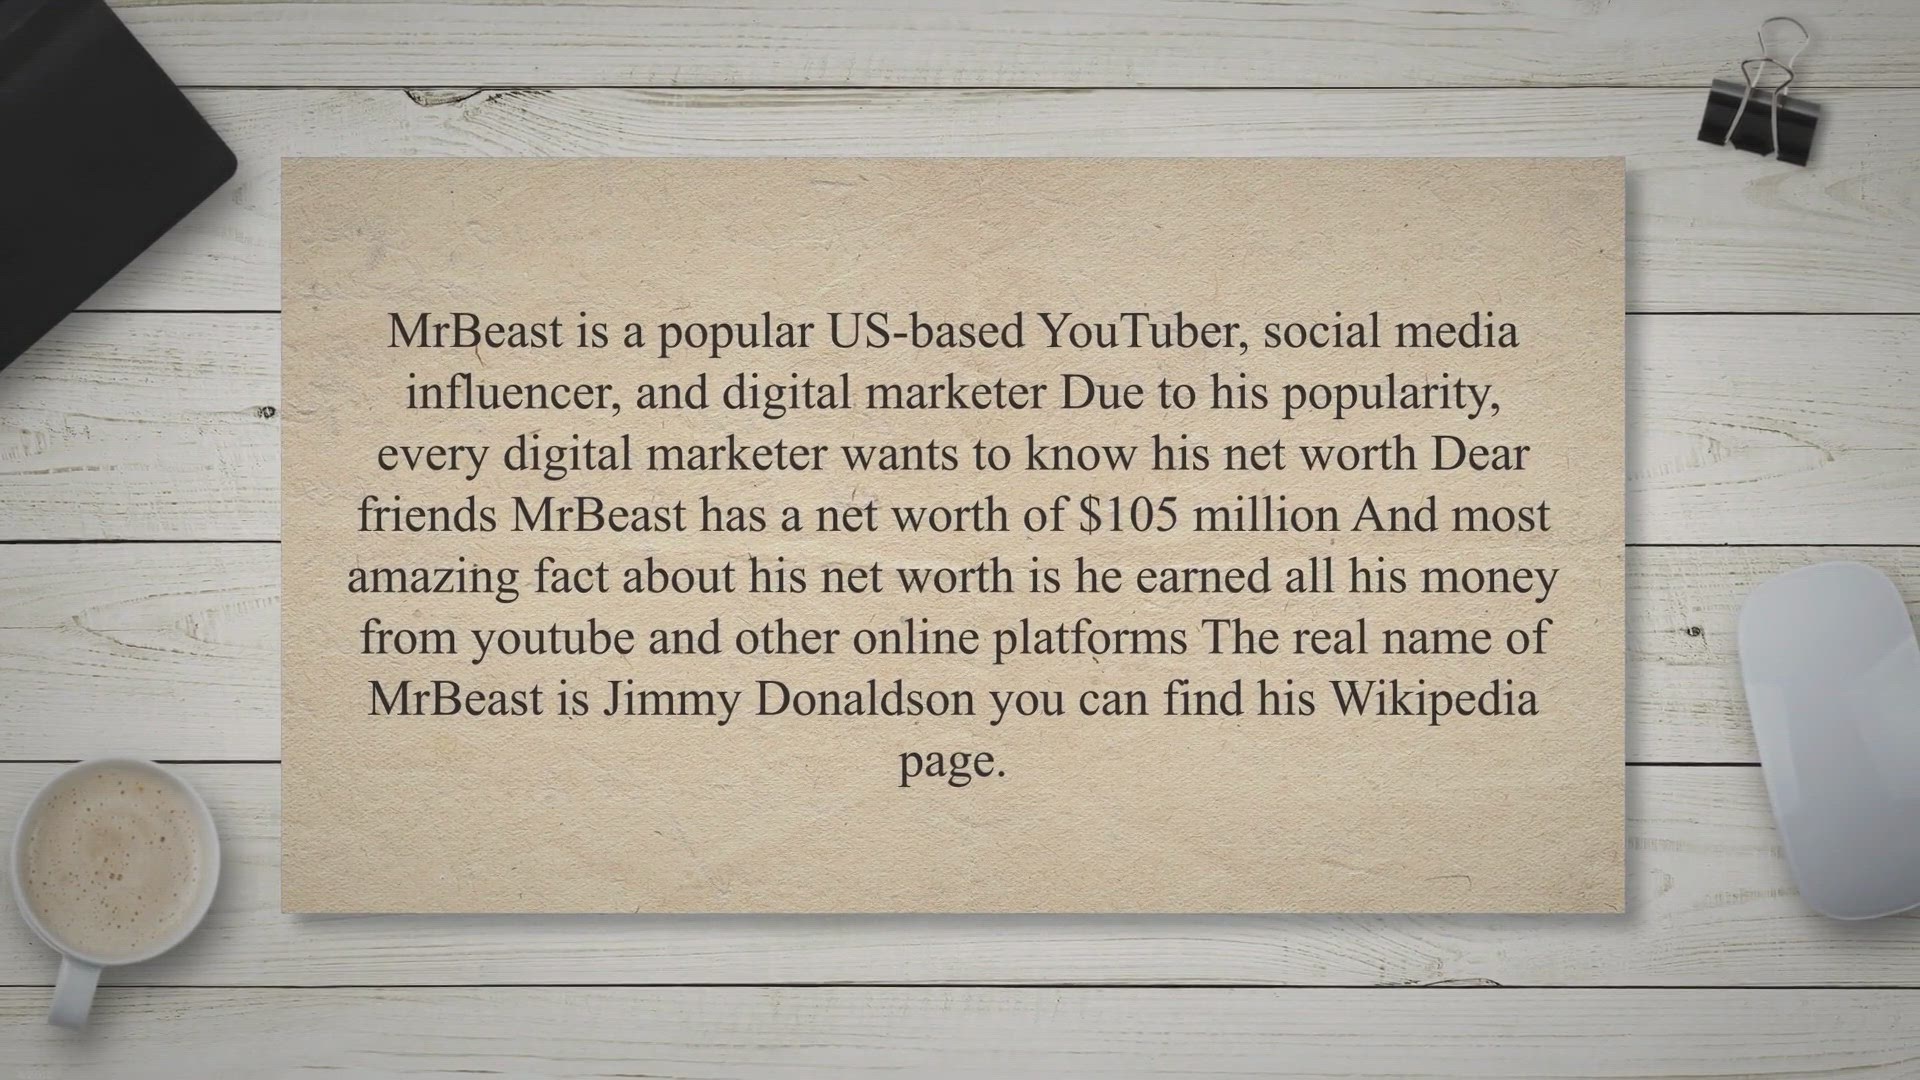 Mr Beast Net Worth 2023: Did He Amass 105 Million Subscribers?